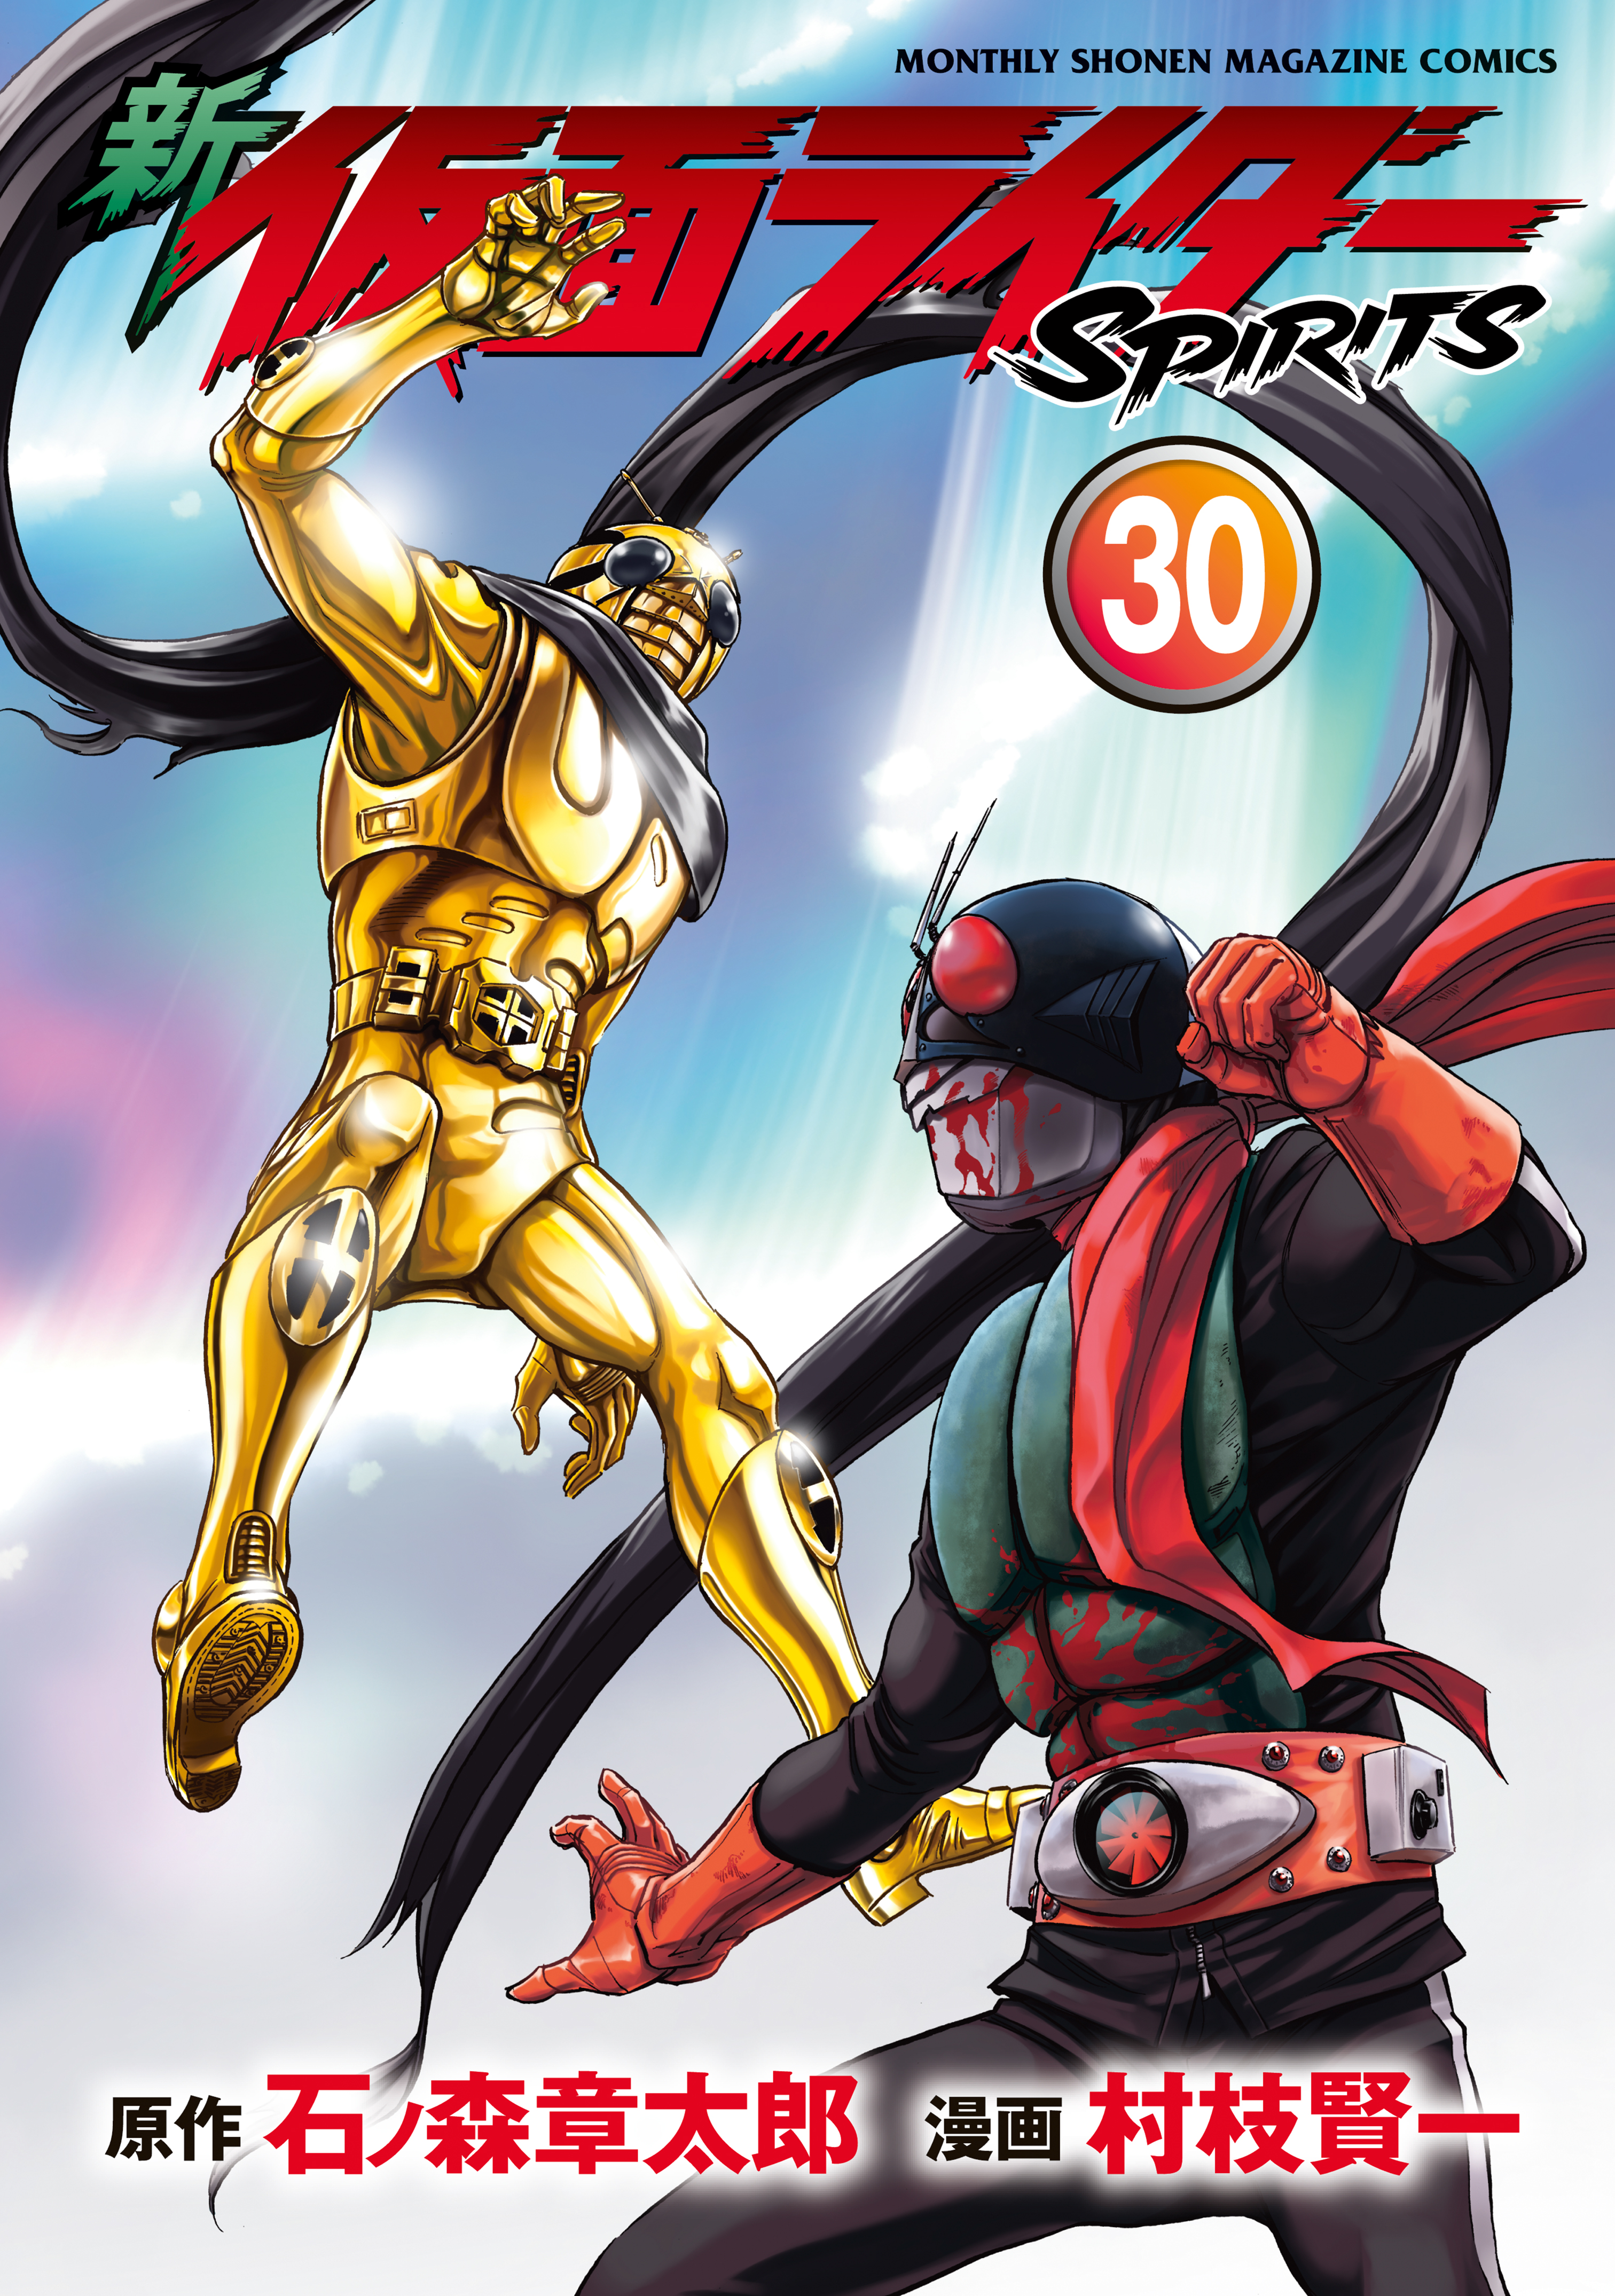 Shin Kamen Rider Spirits cover 17